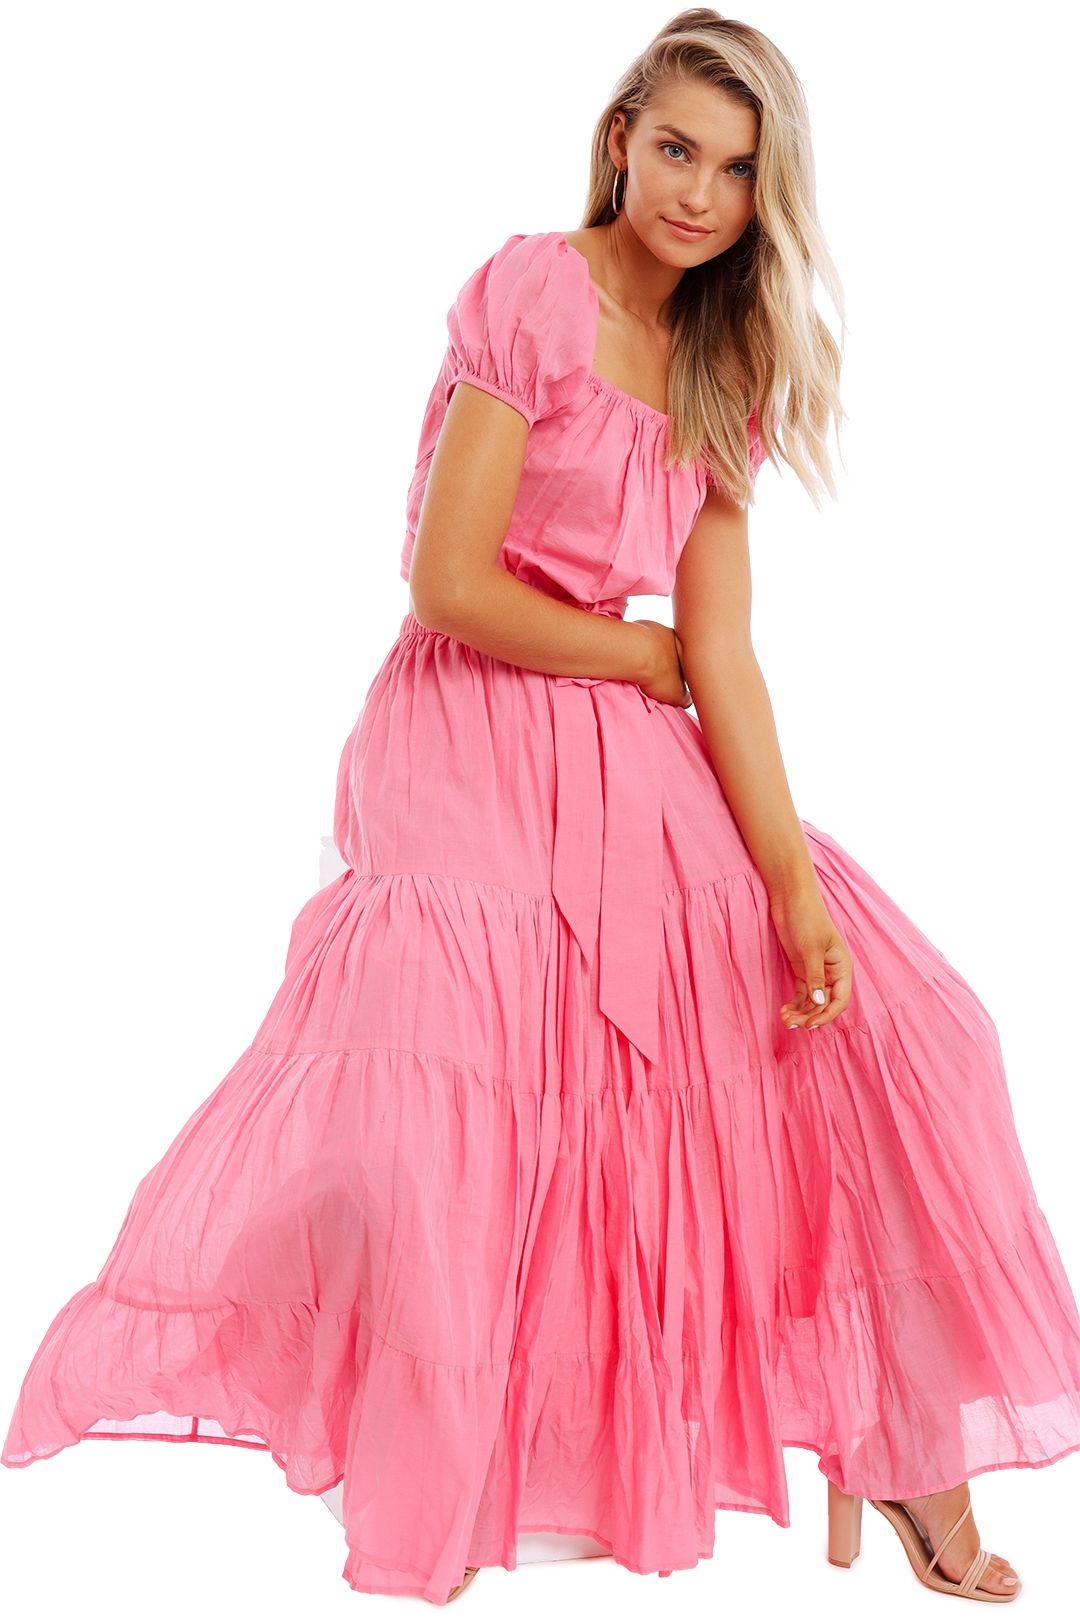 Spell Azalea Blouse and Skirt Set Candy pink